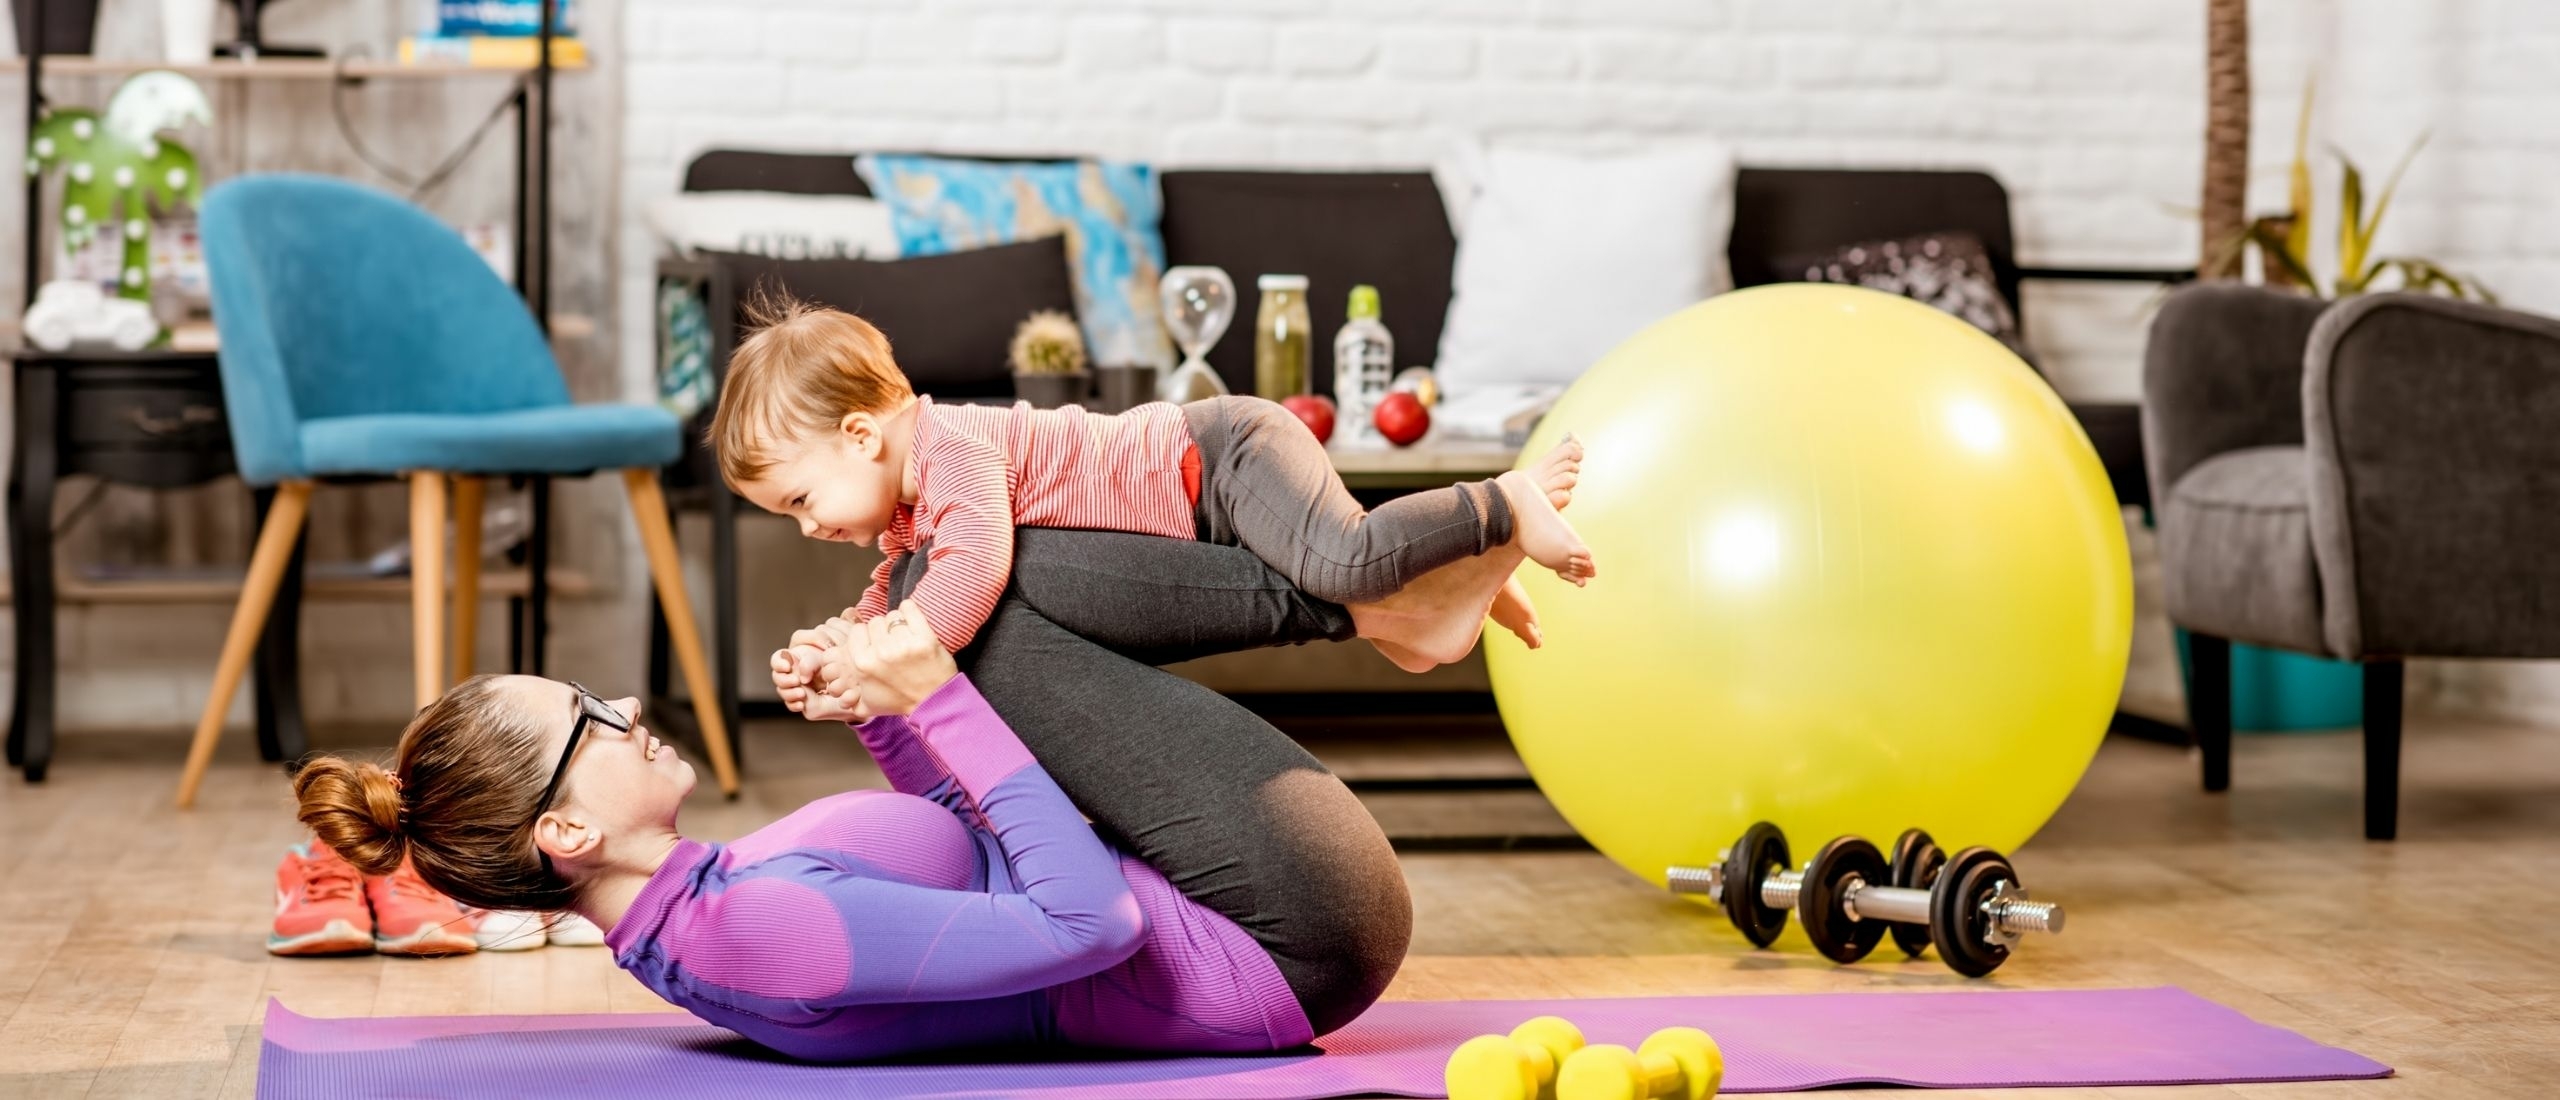 toddler-gymnastics-at-home-tips